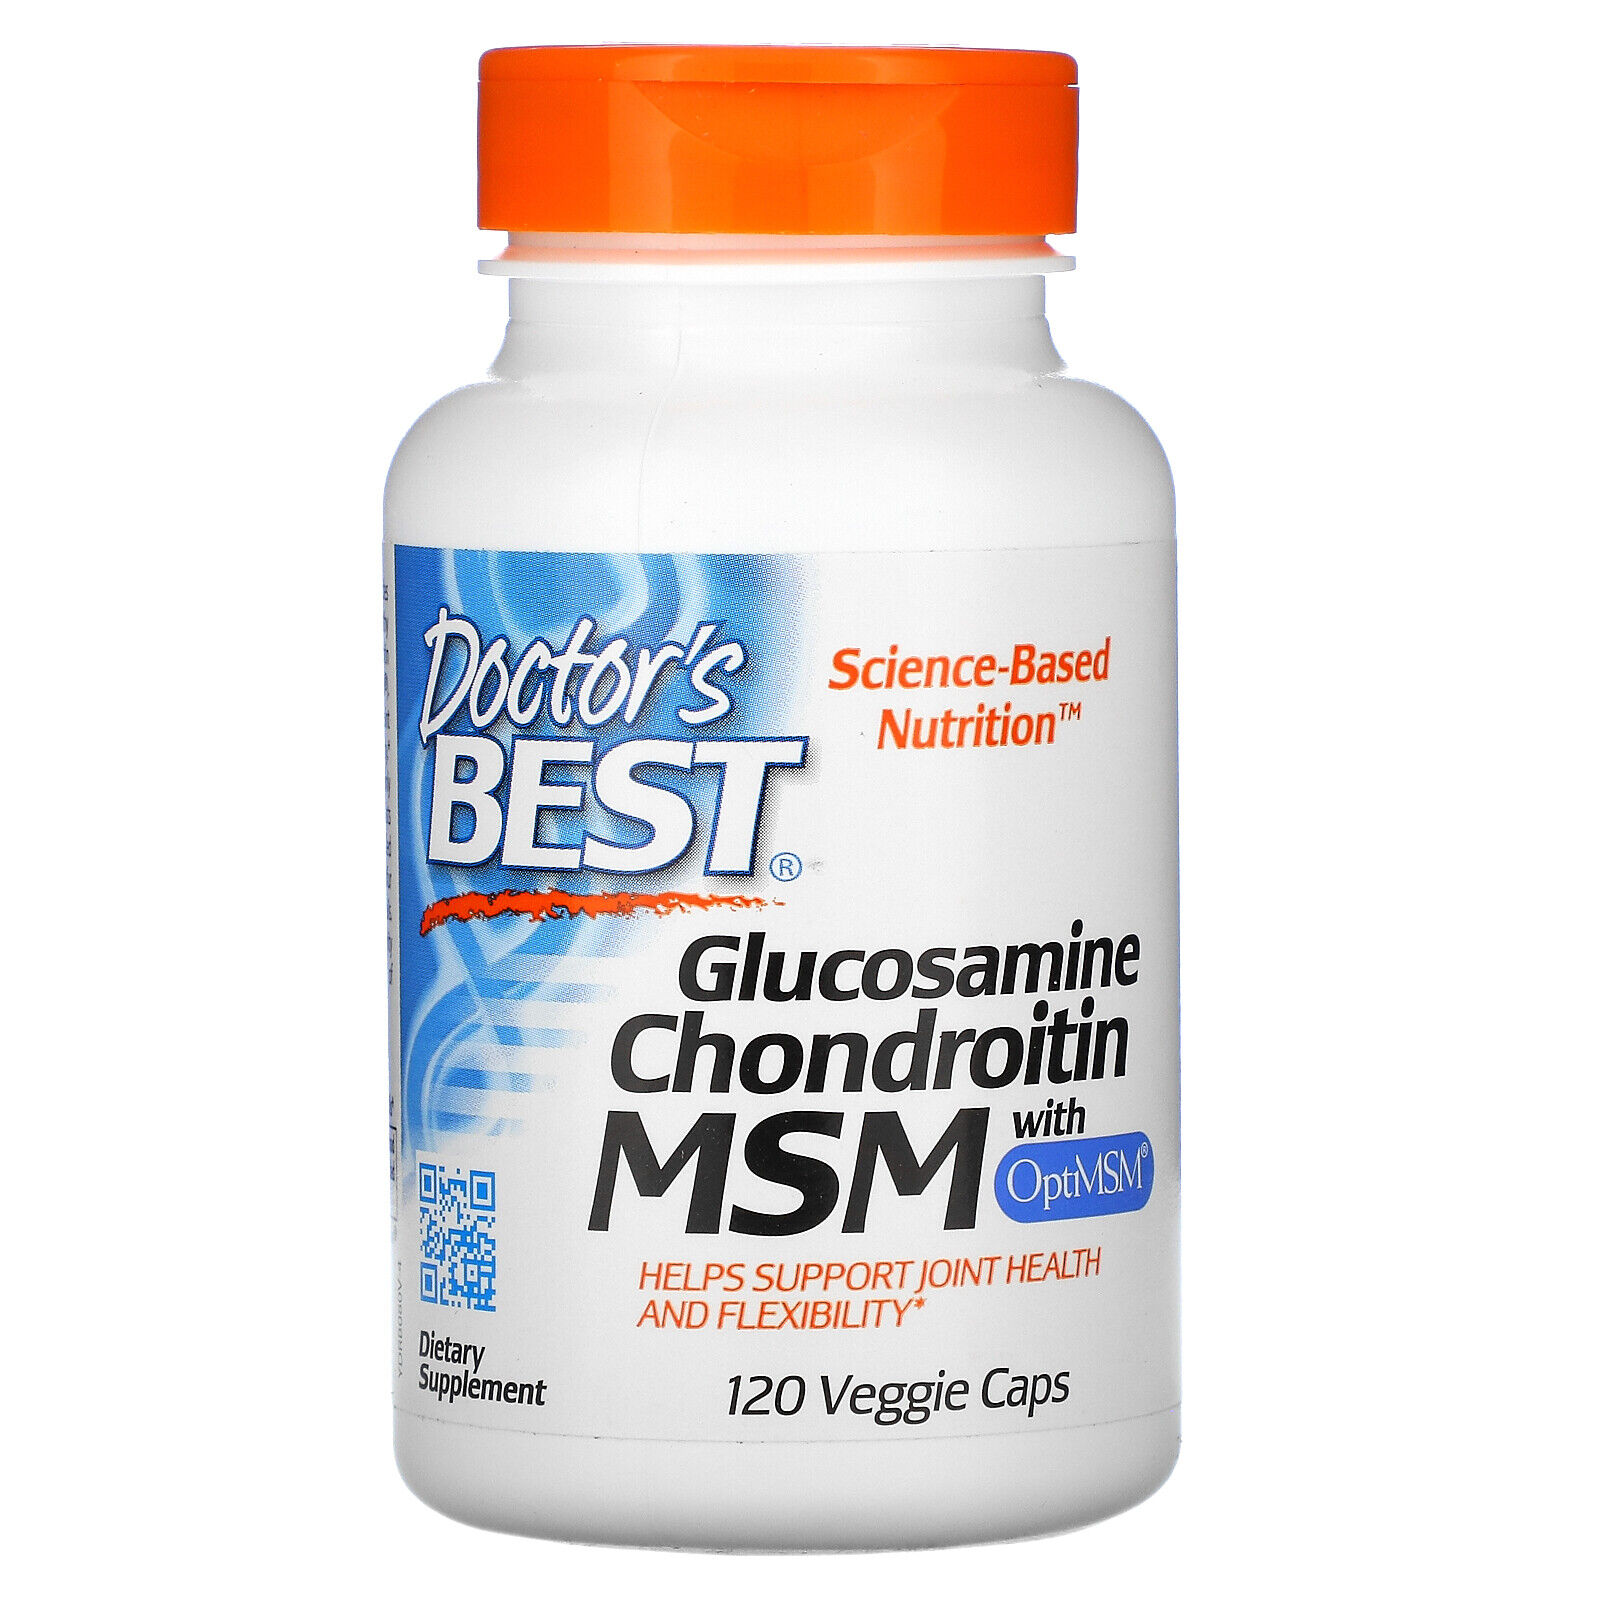 Doctor's Best Glucosamine Chondroitin MSM with OptiMSM, Veggie Caps, Dietary